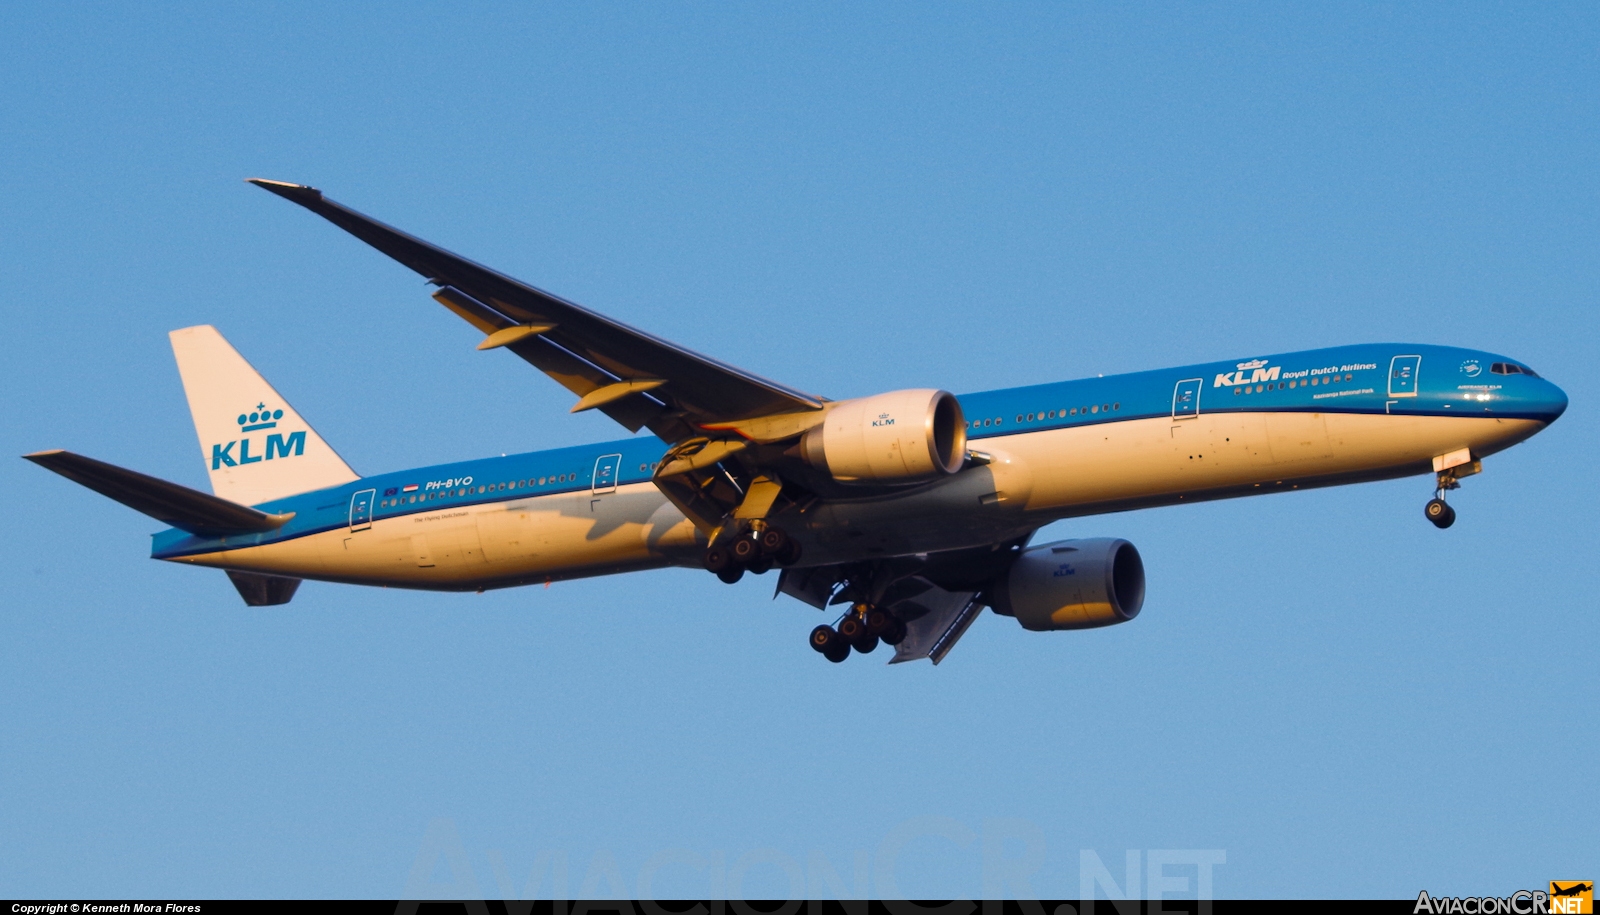 PH-BVO - Boeing 777-306ER - KLM - Royal Dutch Airlines